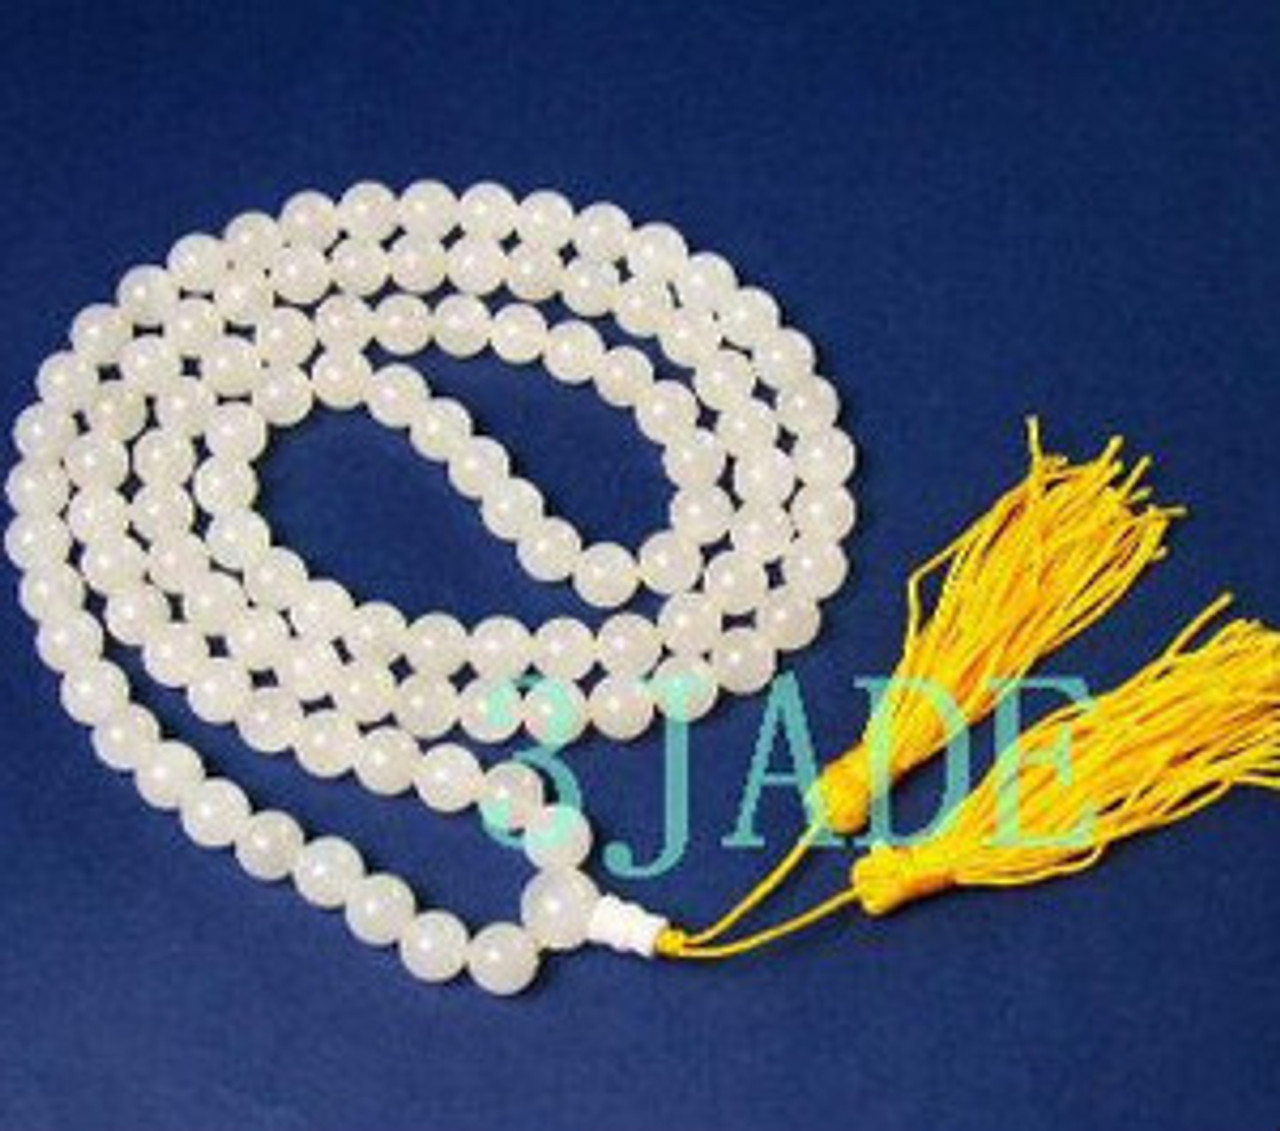 Clcite prayer beads